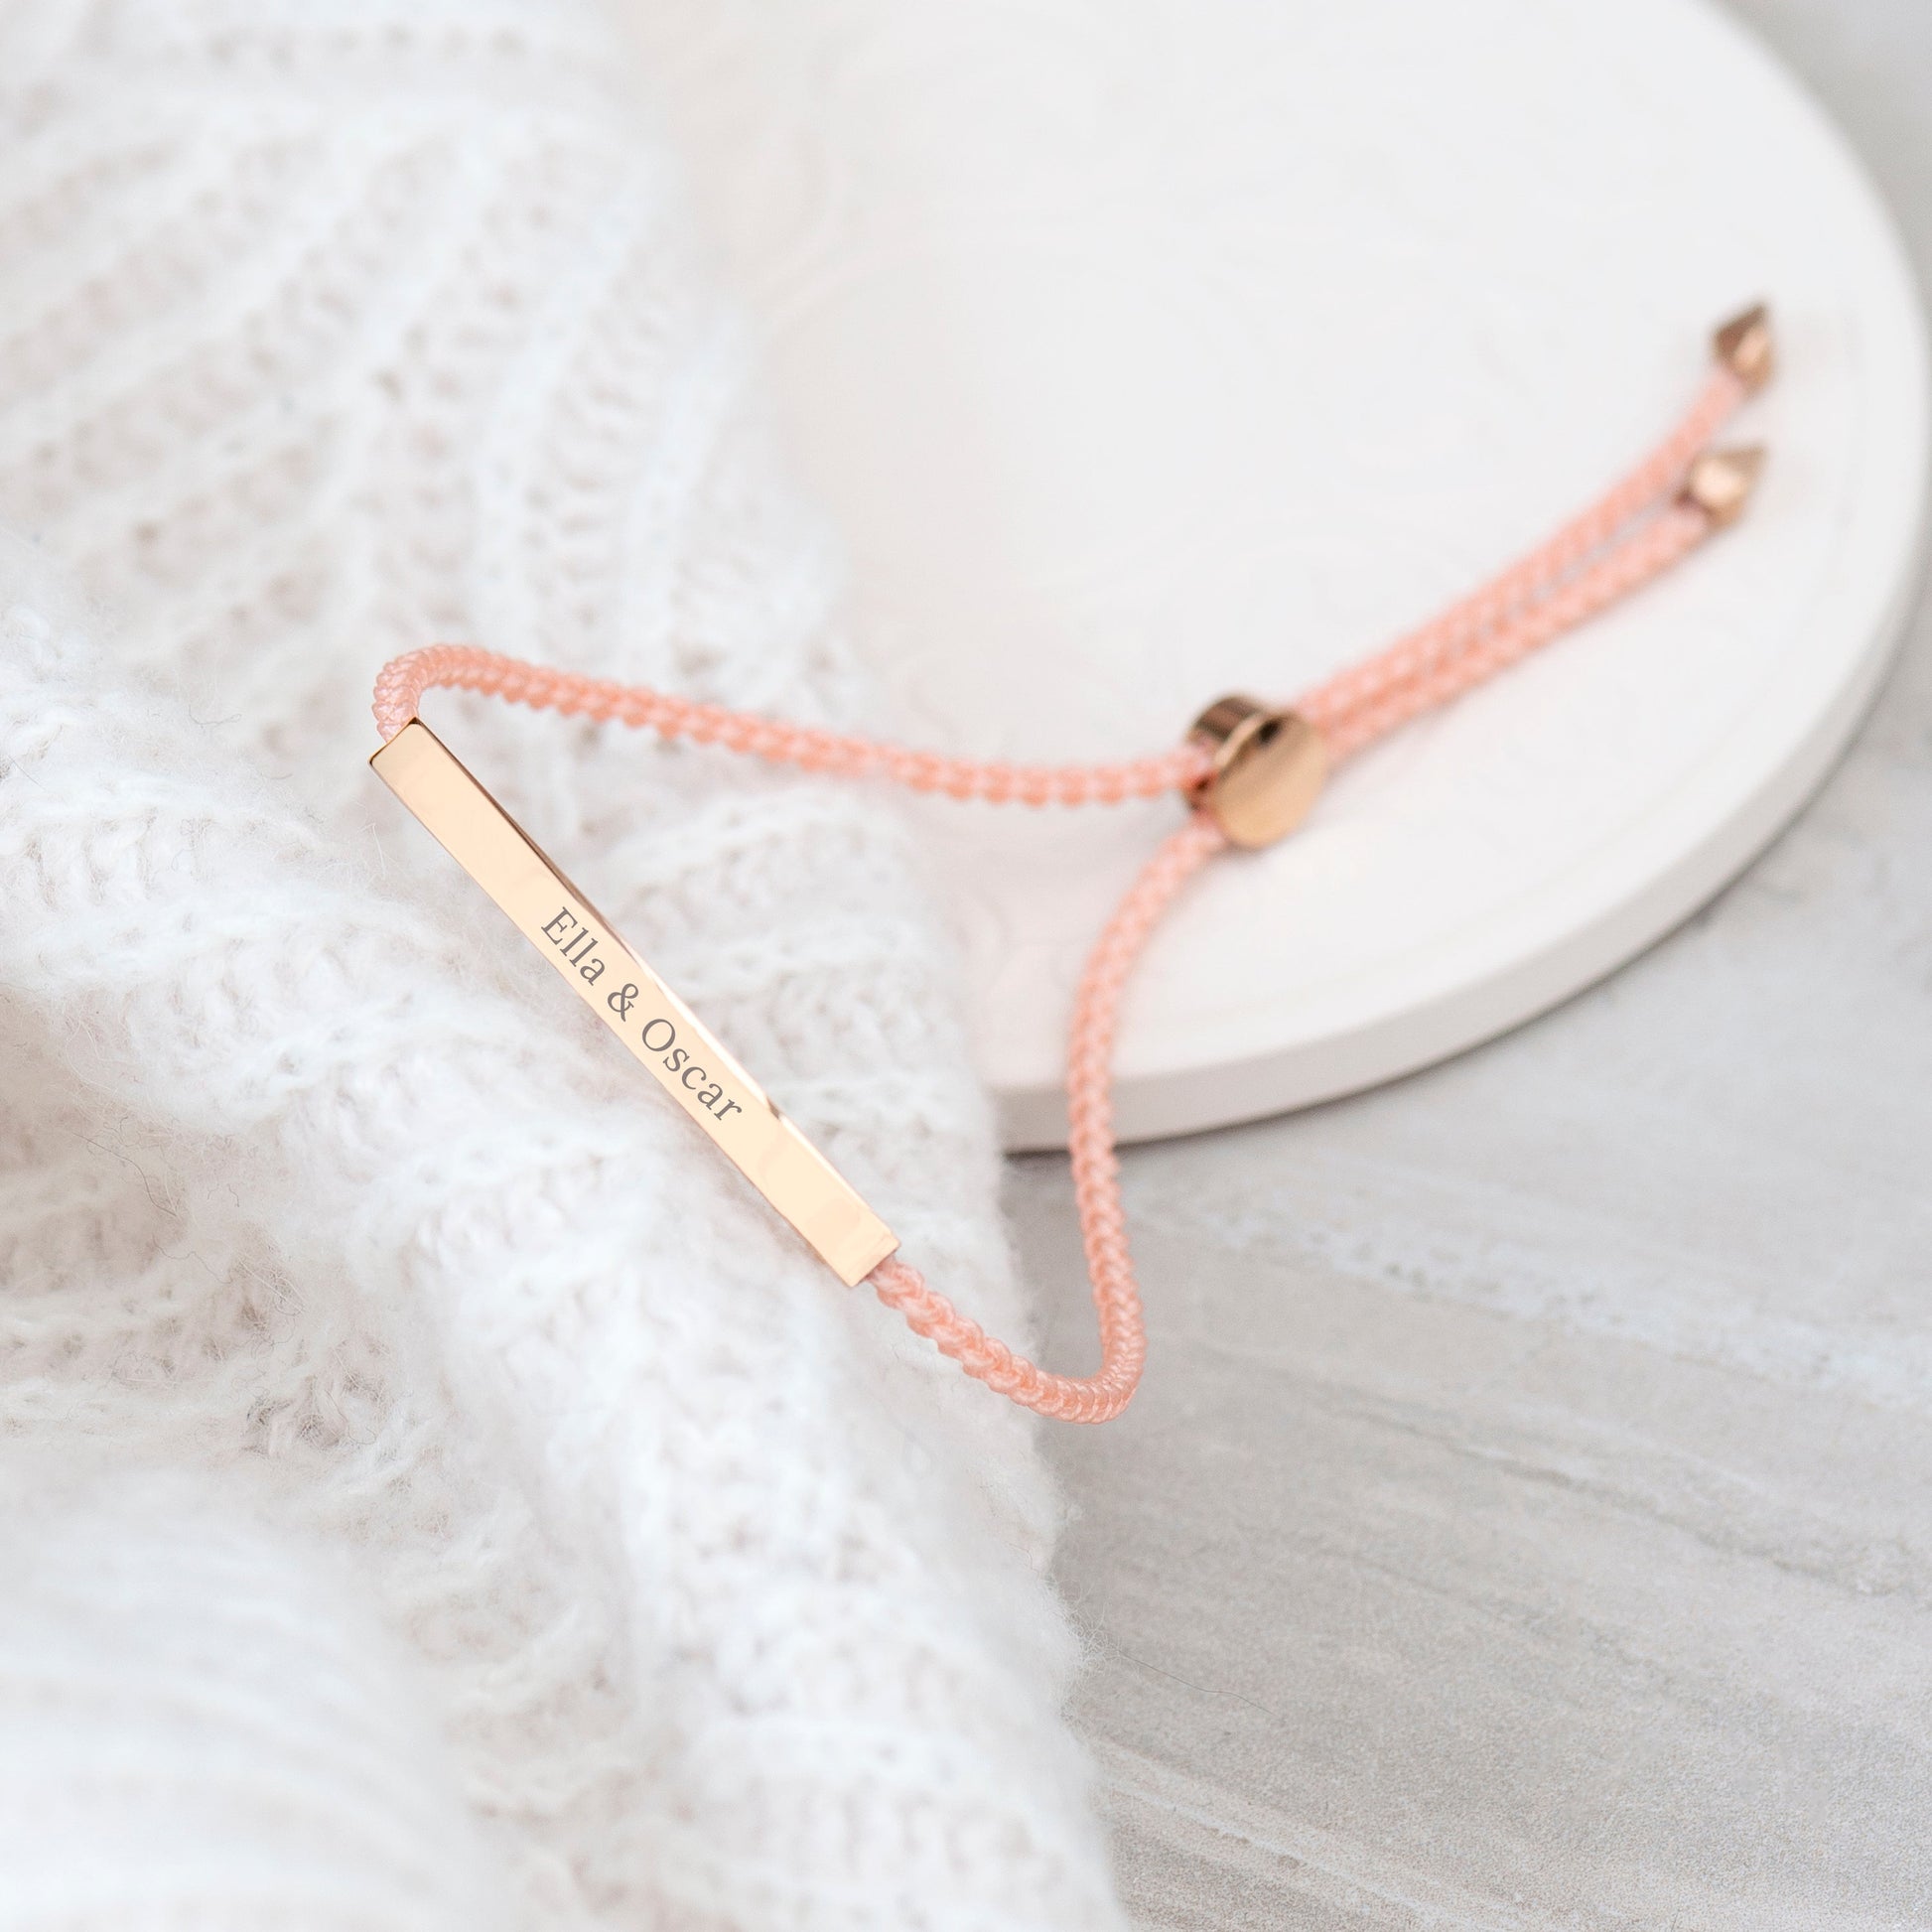 Personalized Bracelets - Personalized Rose Gold Identity Rope Bracelet 